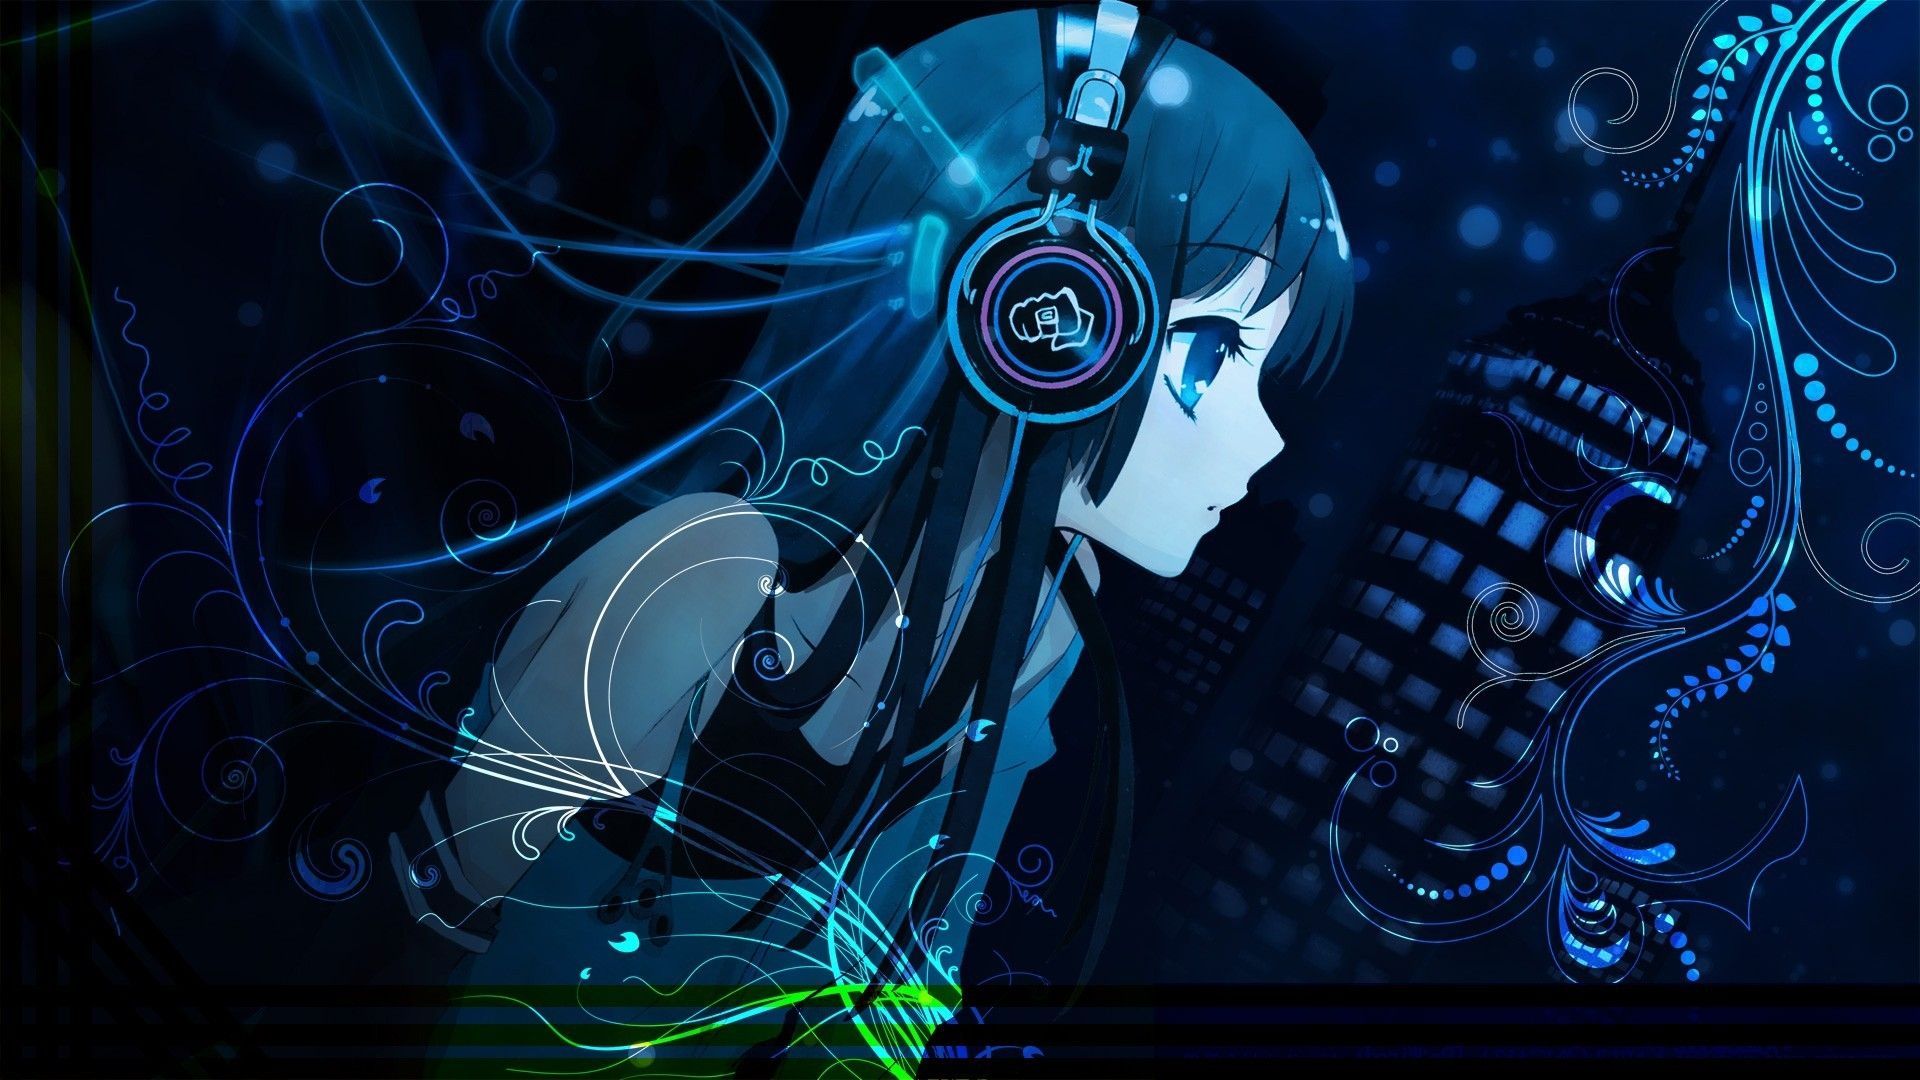 Anime Girl with Headphones Wallpaper Free Anime Girl with Headphones Background